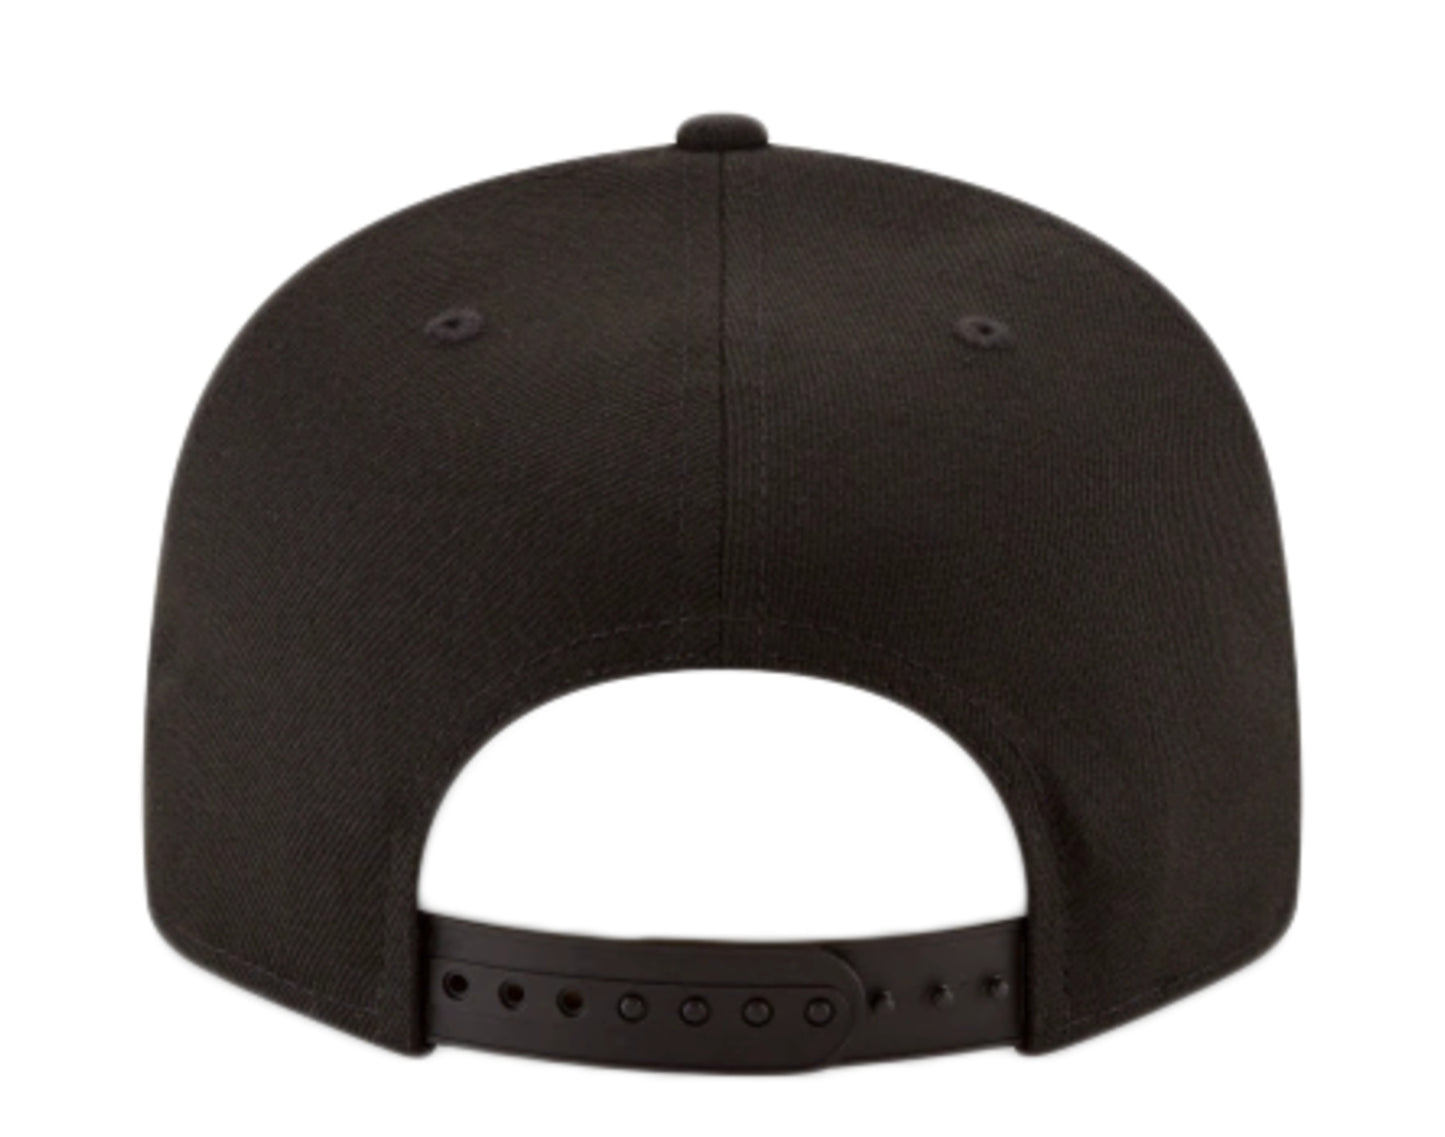 New Era 9Fifty MLB Chicago White Sox Basic Black/White Snapback Hat 11591069